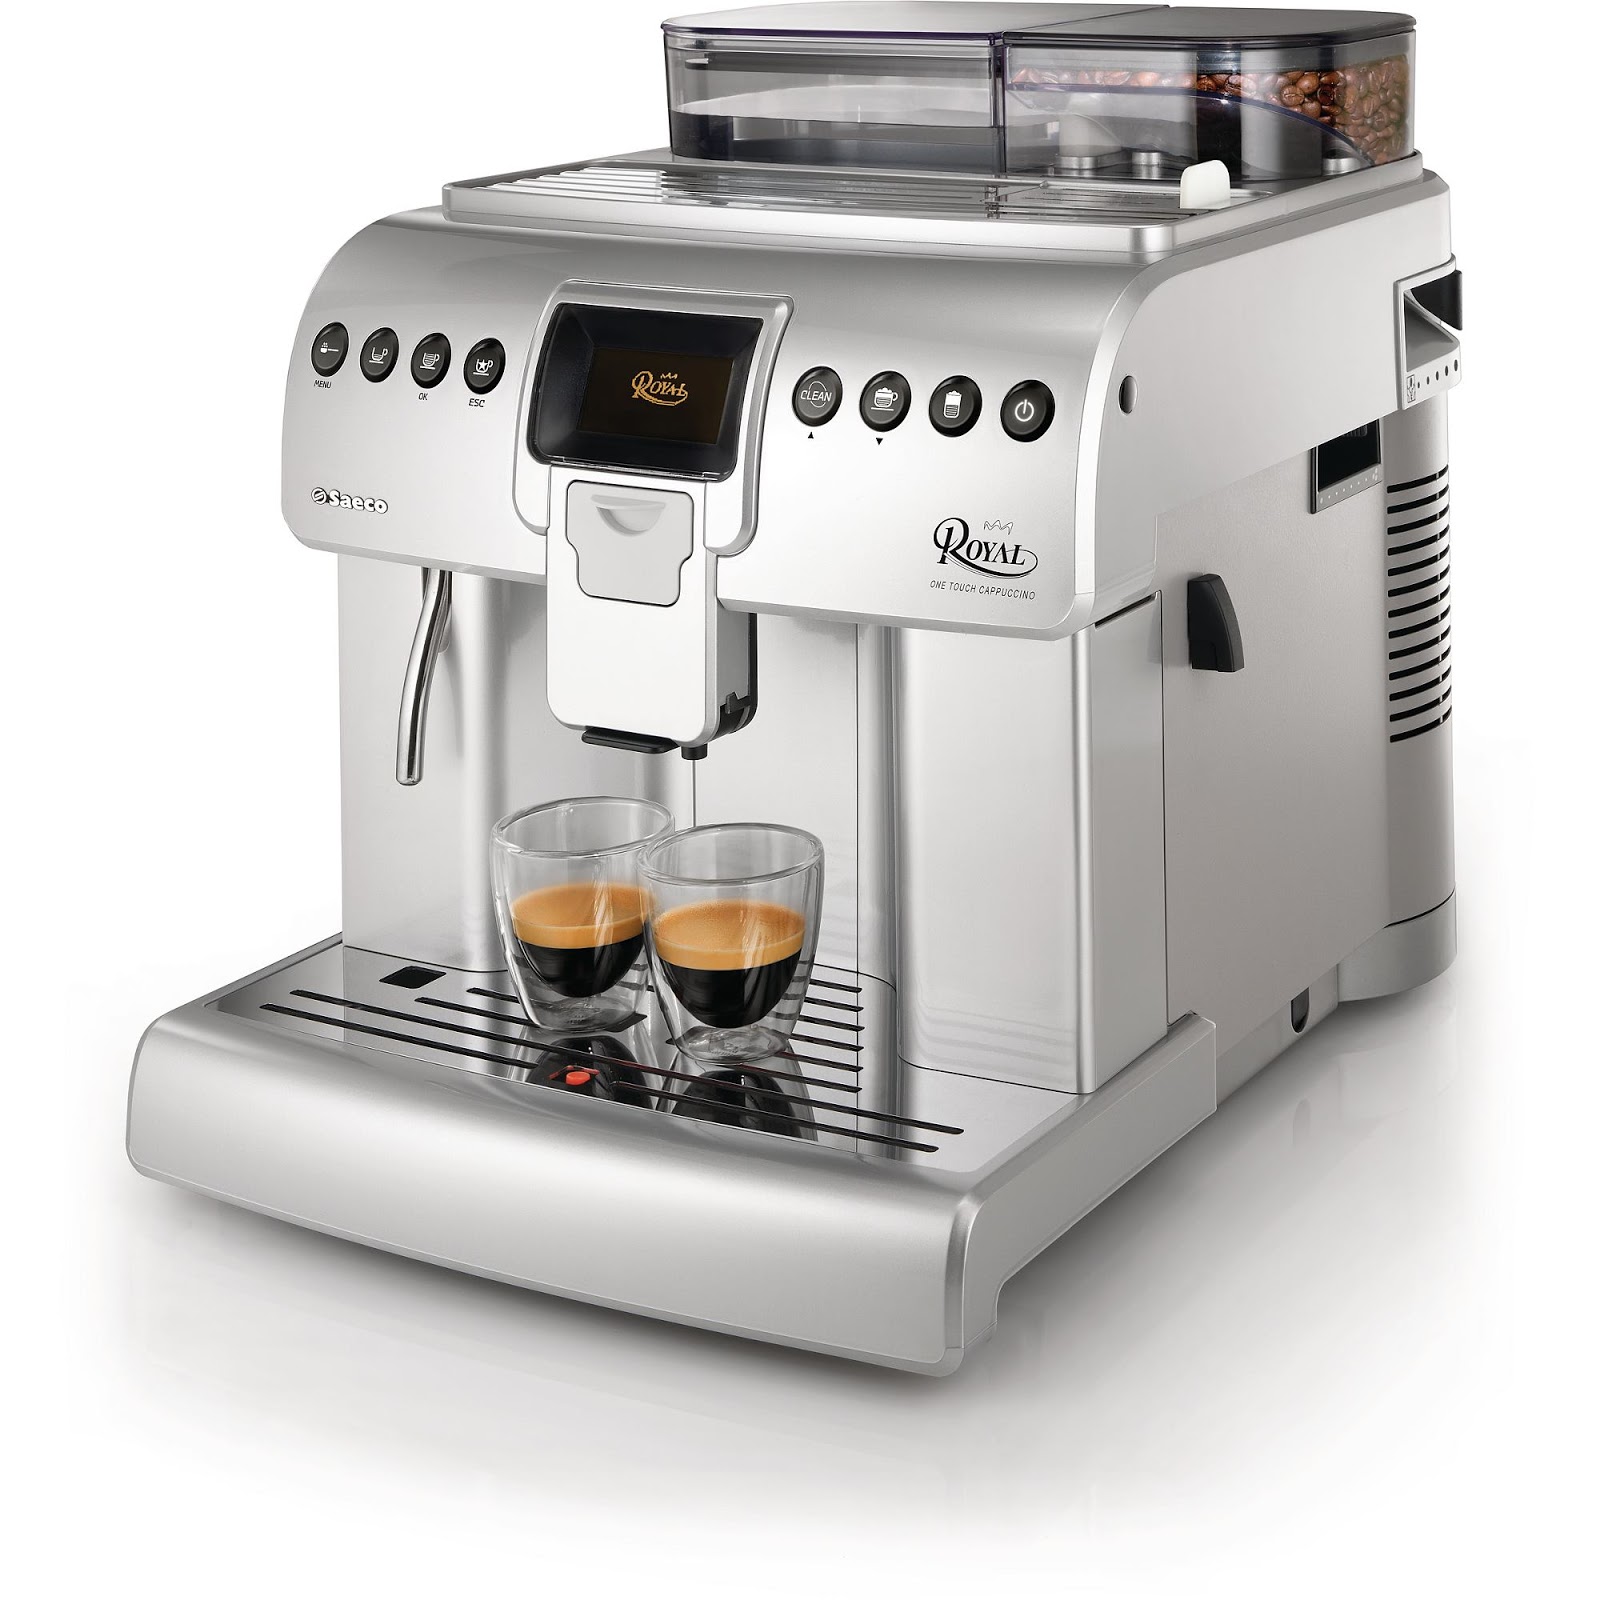 MACHINE PHILIPS coffee TUNGGAL dan saeco SAECO manual royal ESPRESO machine KEAGENAN GAGGIA